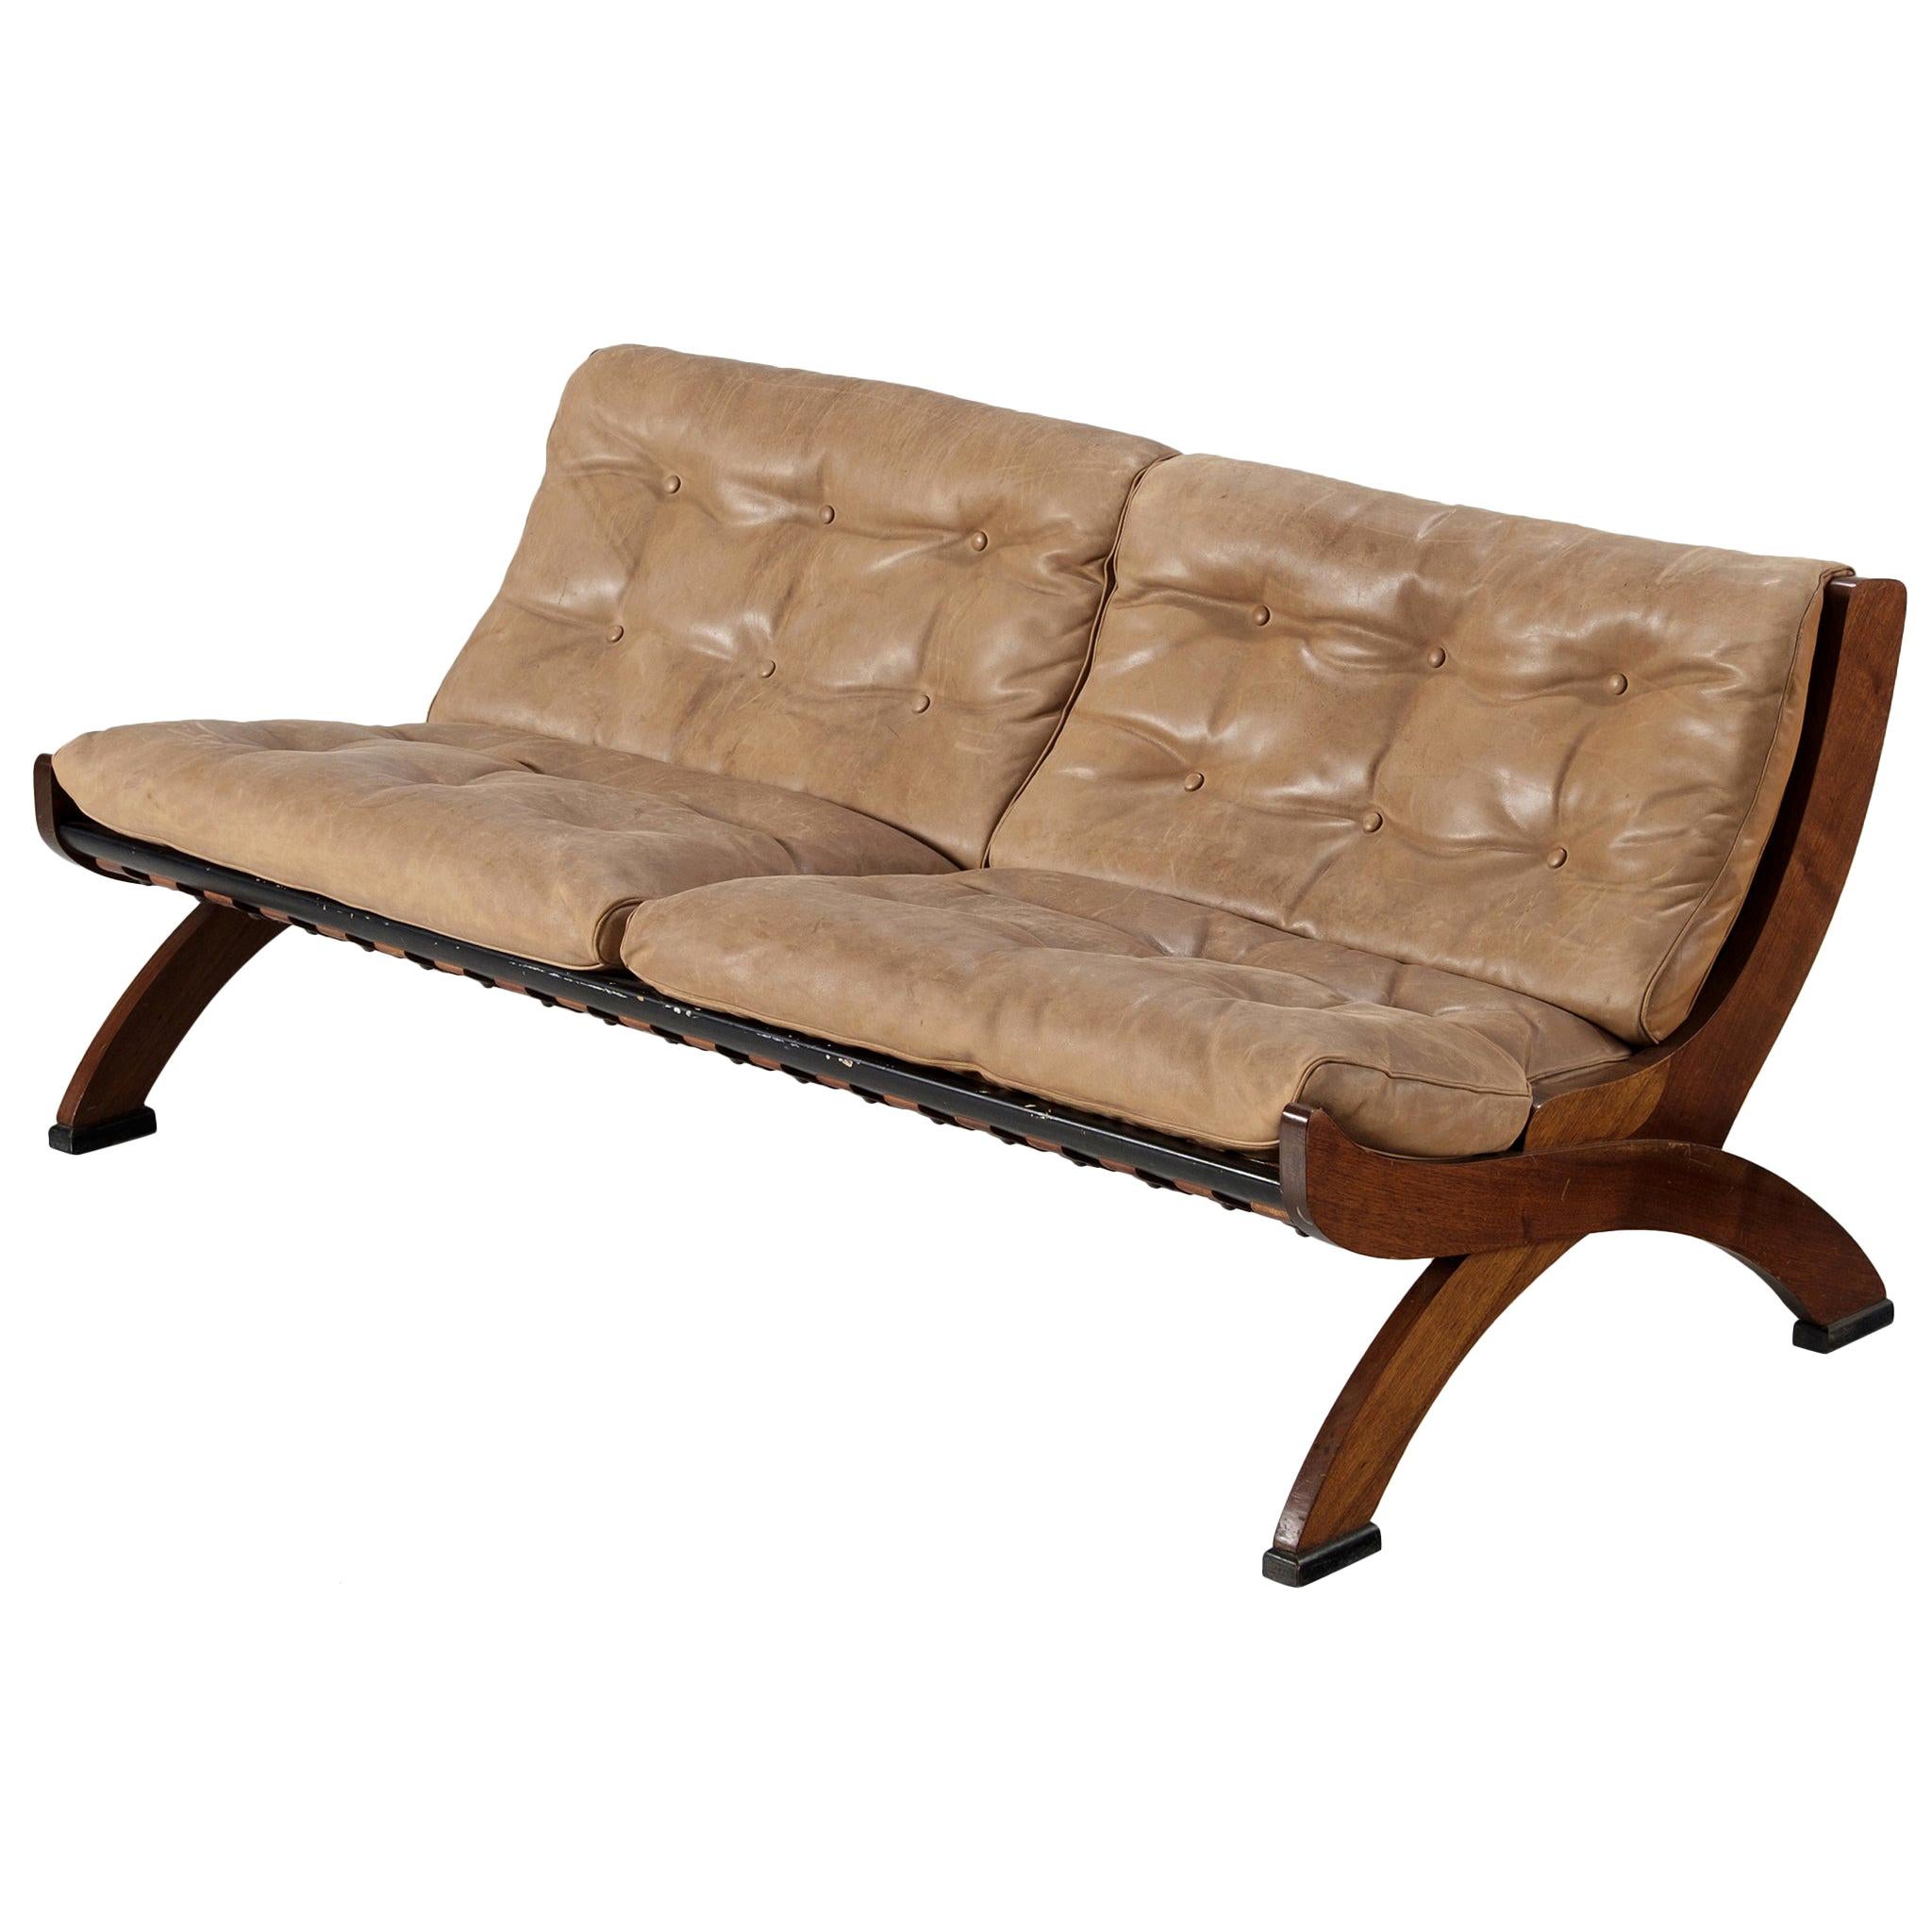 Marco Comolli Sofa in Walnut and Leather